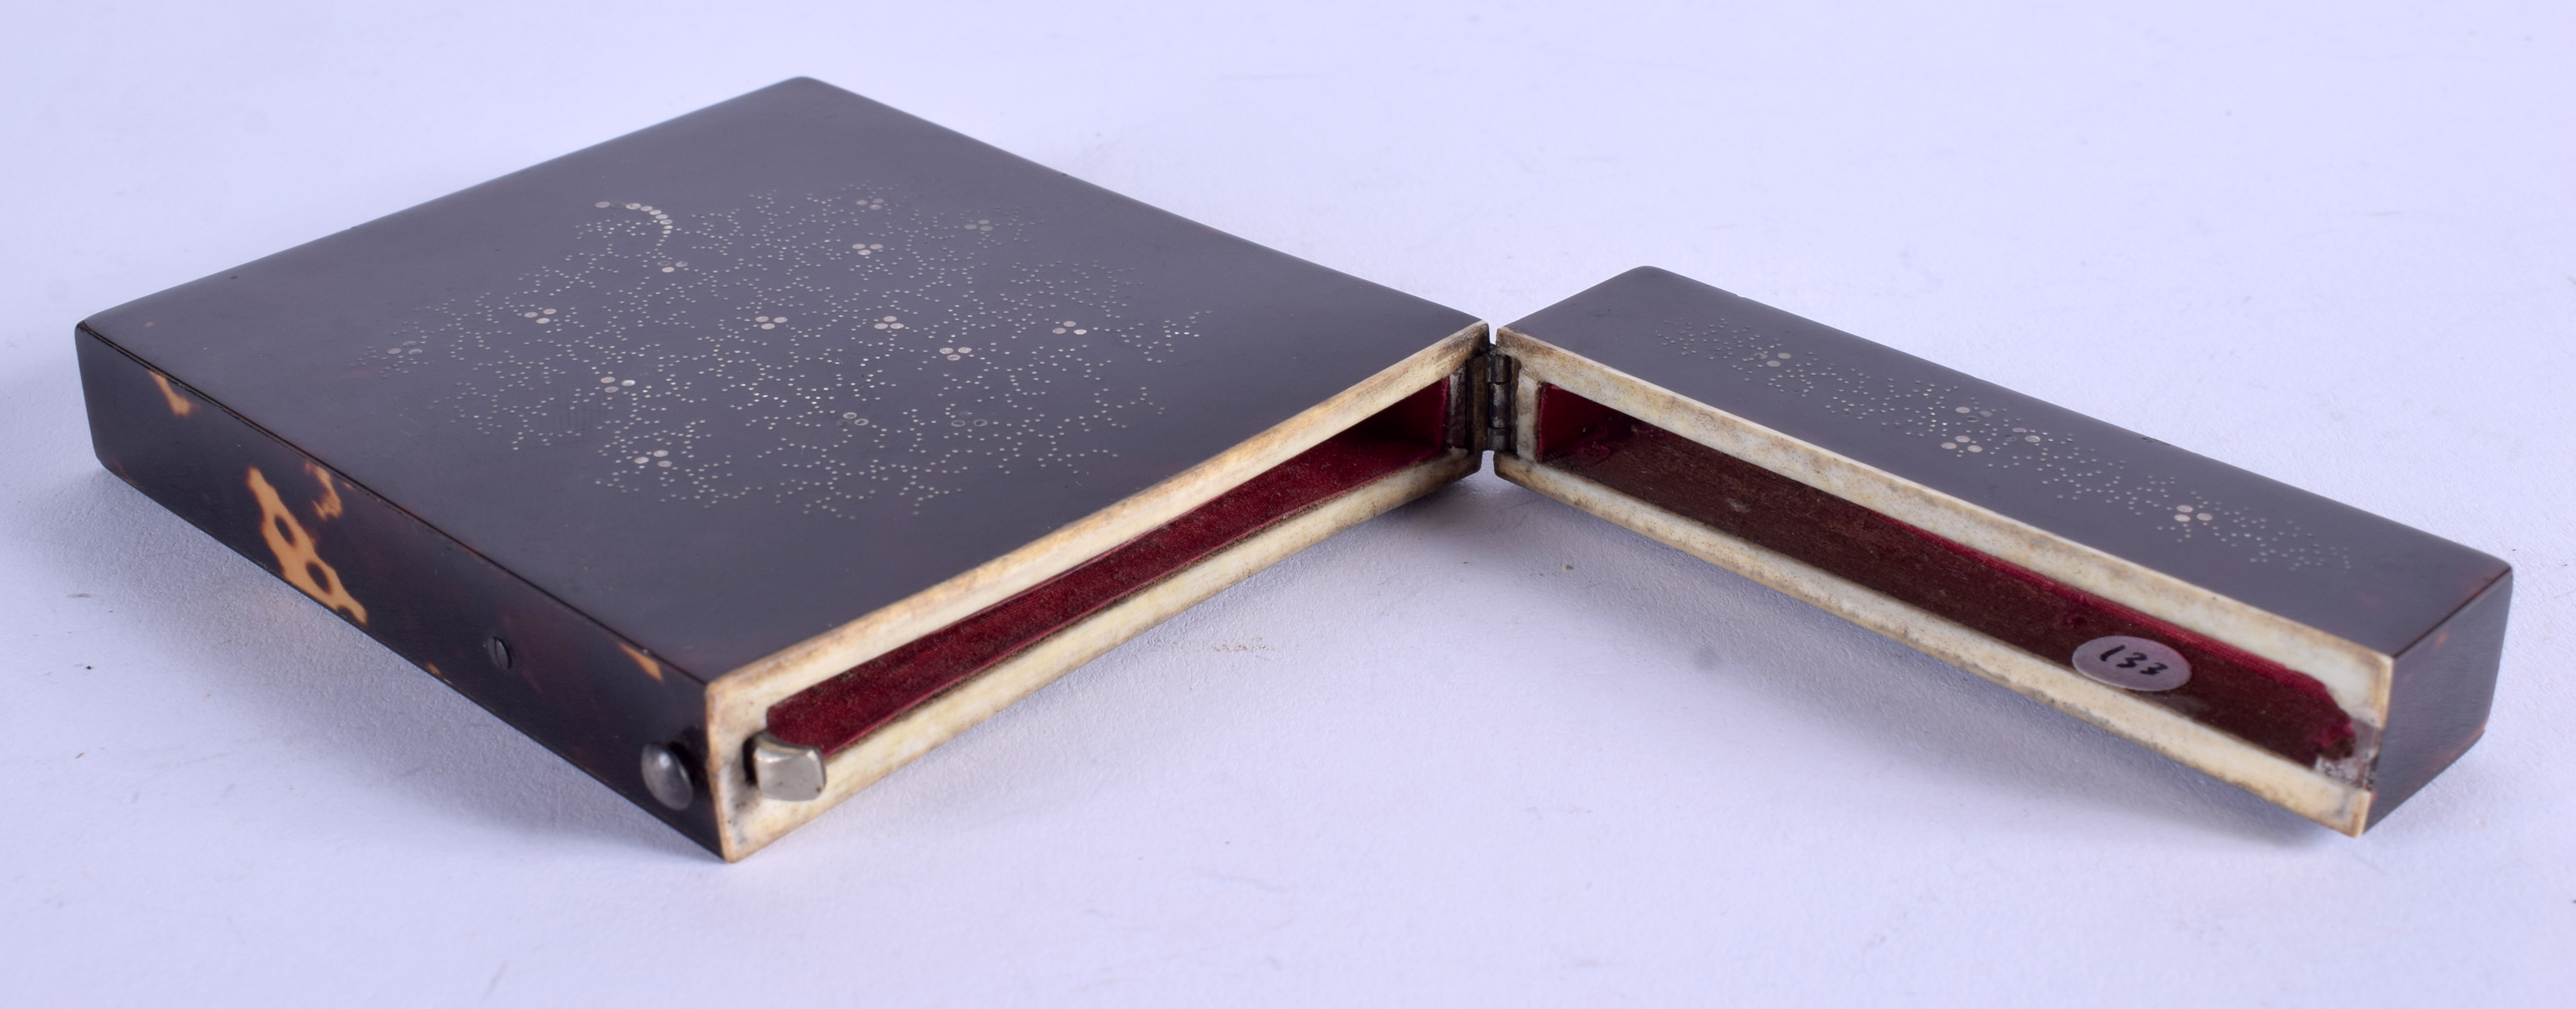 A REGENCY SILVER INLAID PIQUE WORK TORTOISESHELL CARD CASE. 7.5 cm x 9.5 cm. - Image 3 of 3